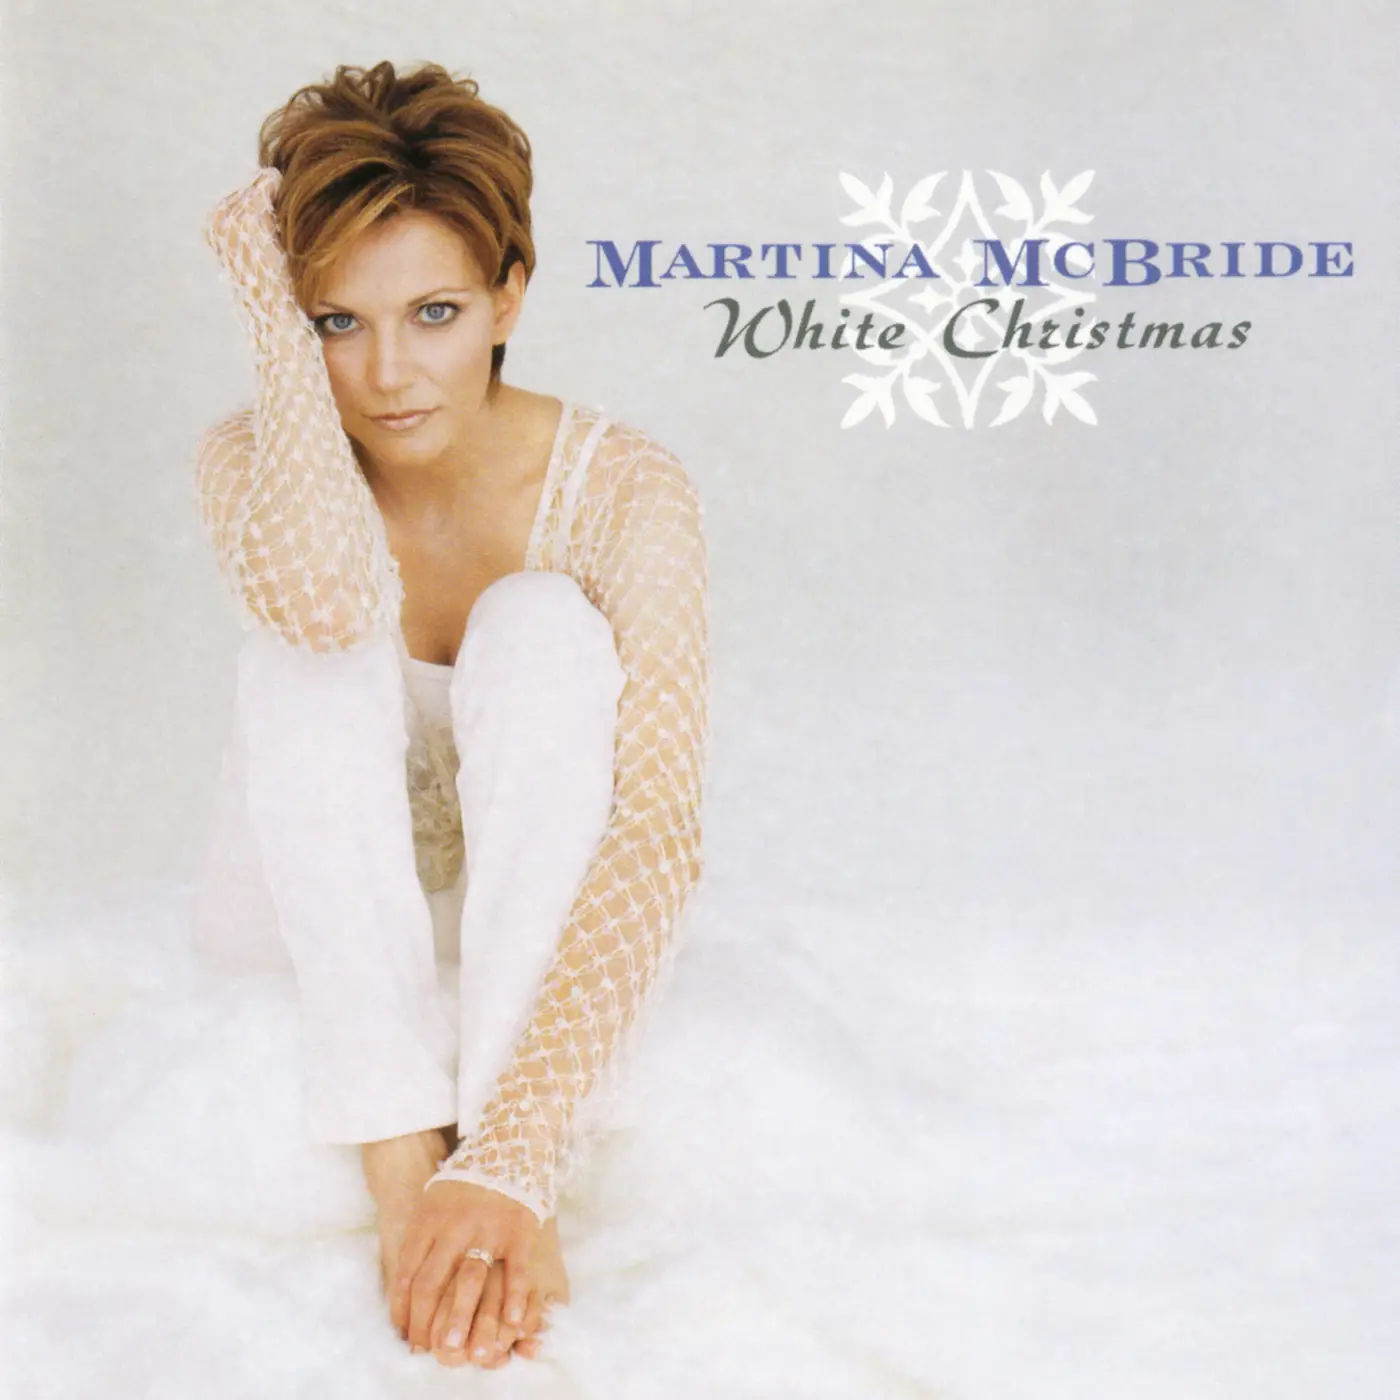 Martina Mcbride White Christmas 1998 2019 [official Digital Download 24 192] Avaxhome